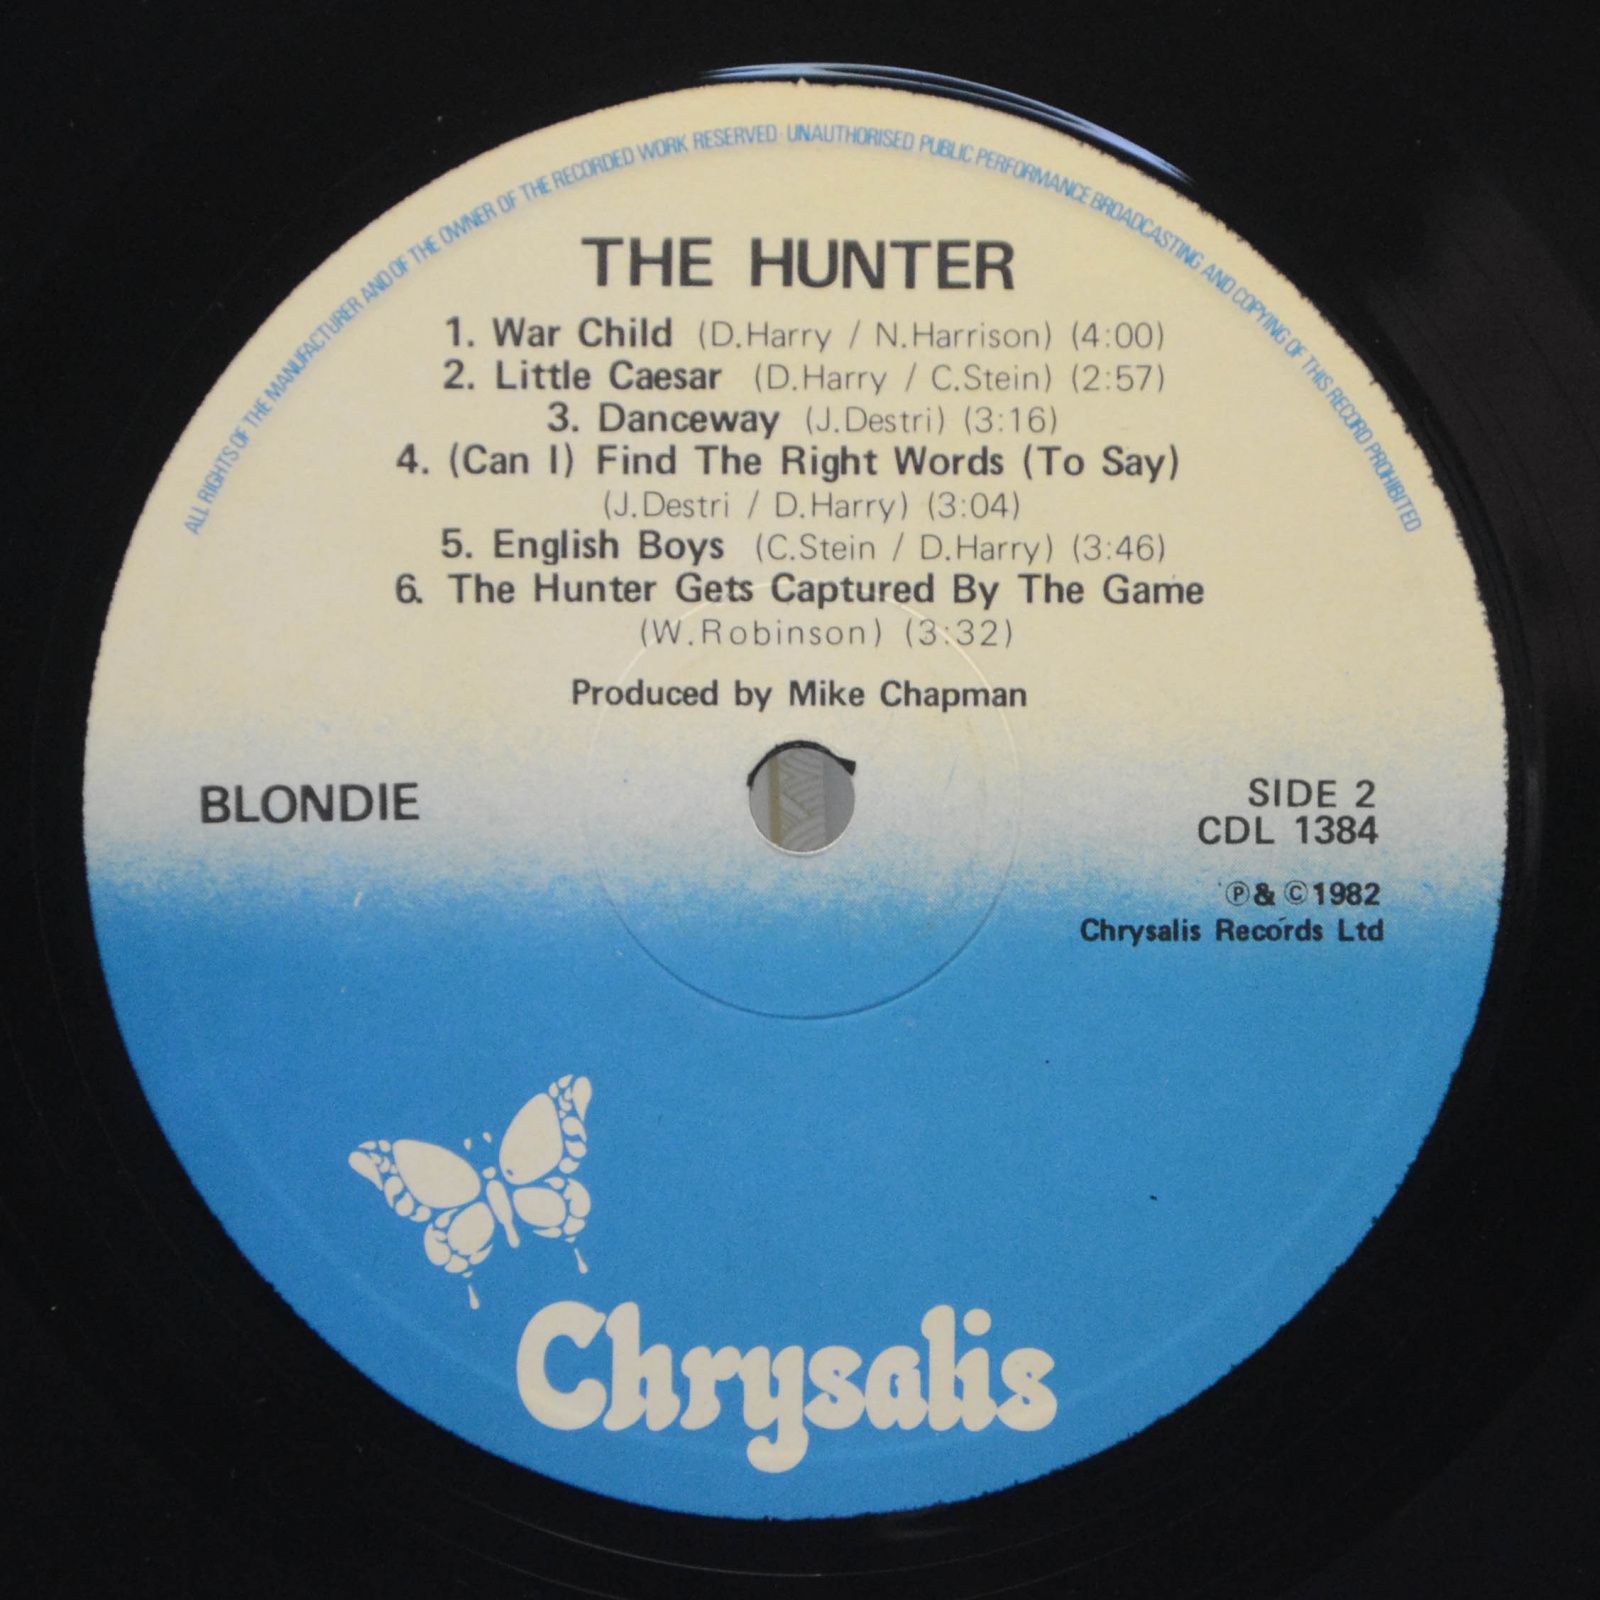 Blondie — The Hunter, 1982